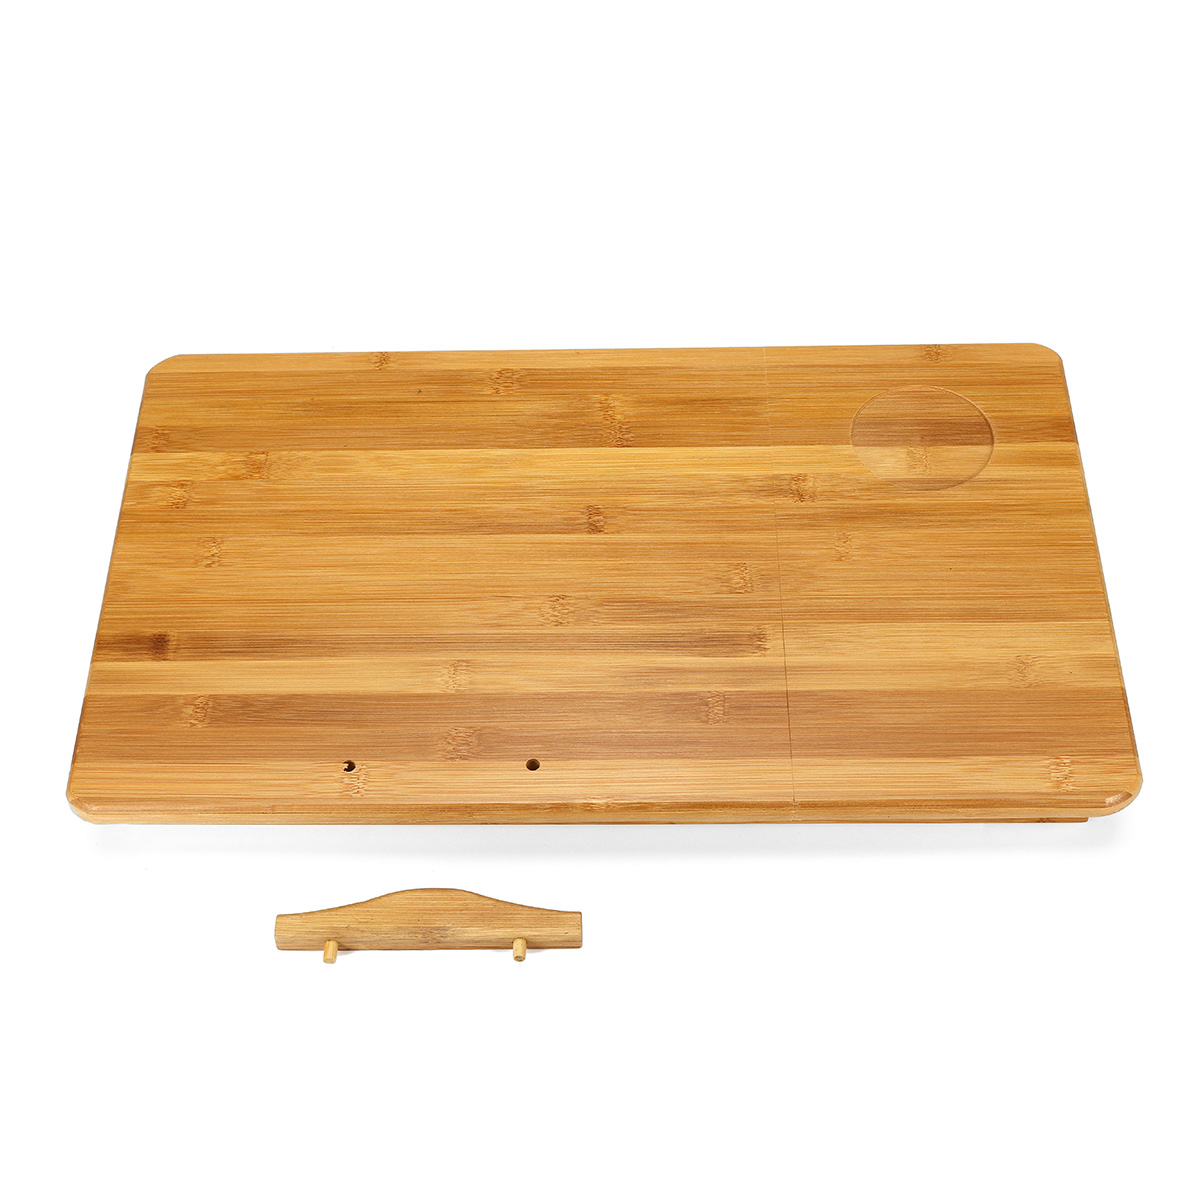 Adjustable-Laptop-Desk-Large-Bed-Tray-Tilting-Top-Foldable-Table-Multi-tasking-Stand-Breakfast-Servi-1547679-9